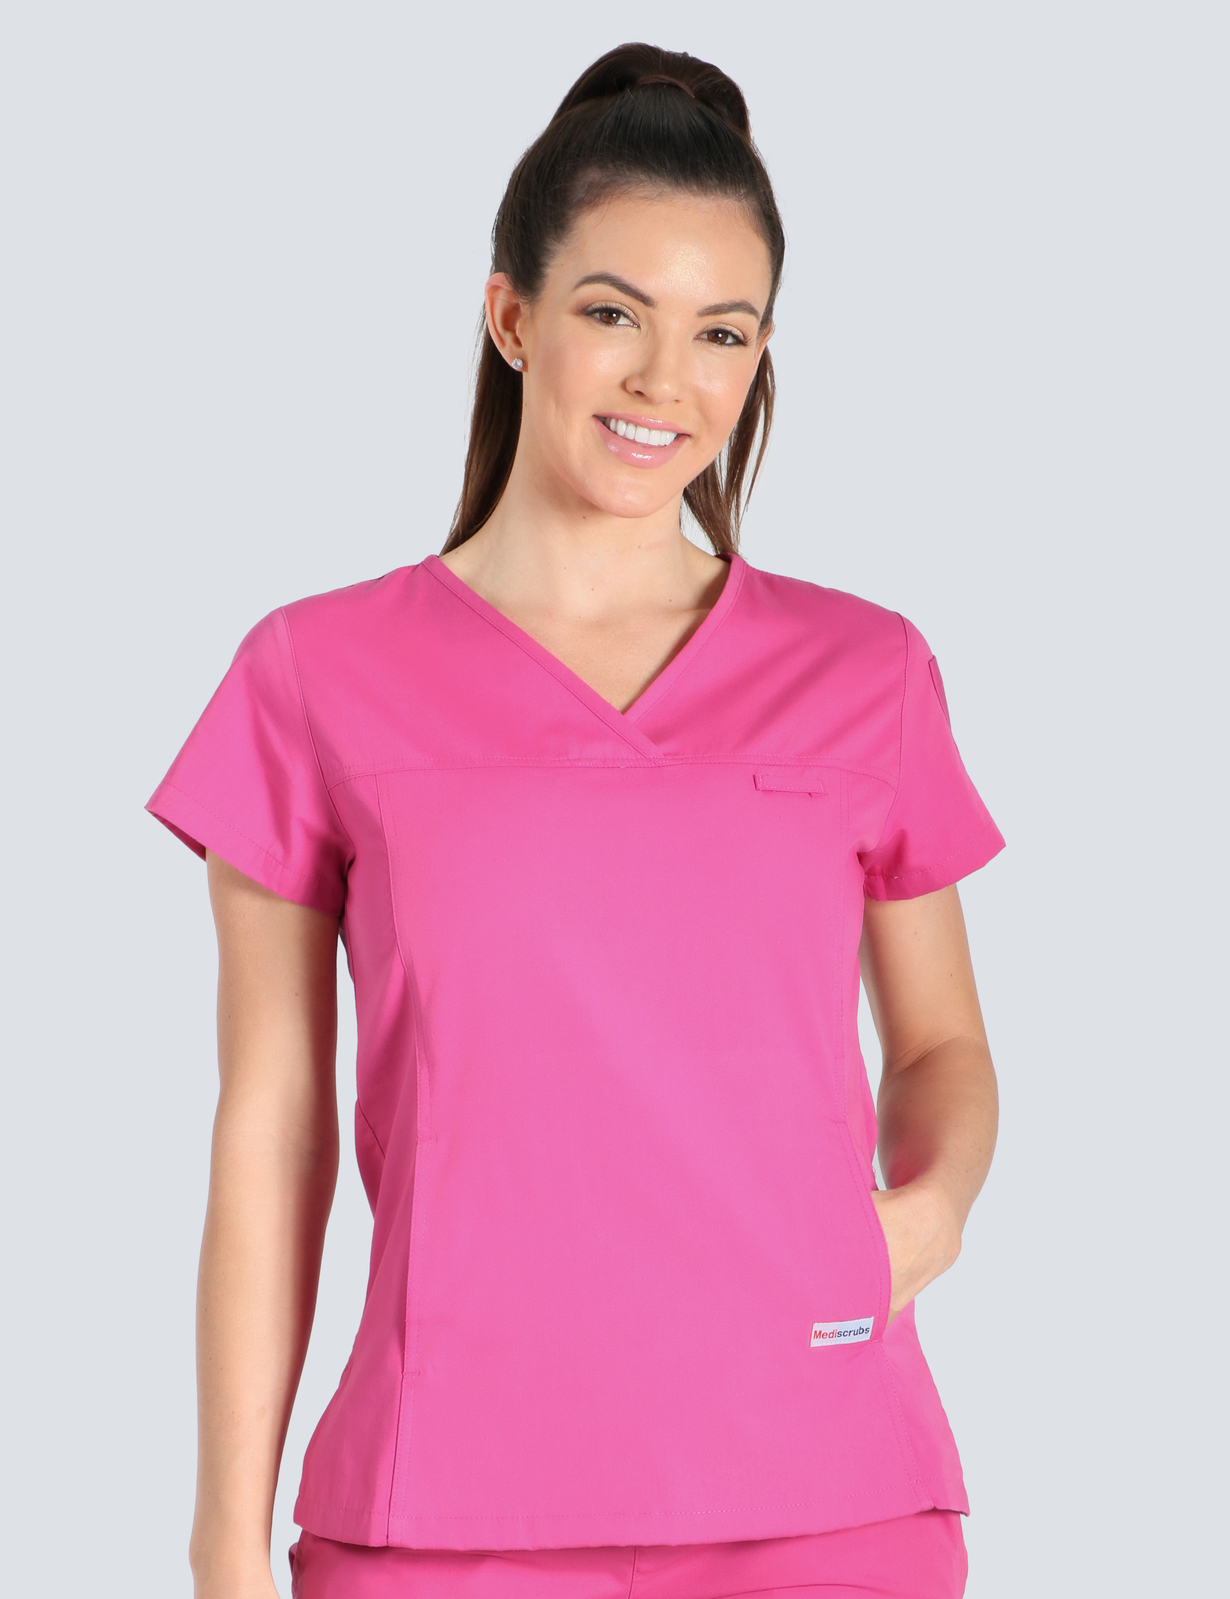 Queensland Children's Hospital Emergency Department Assistant Nurse Unit Manager Uniform Top Bundle  (Women's Fit Top in Pink incl Logos)